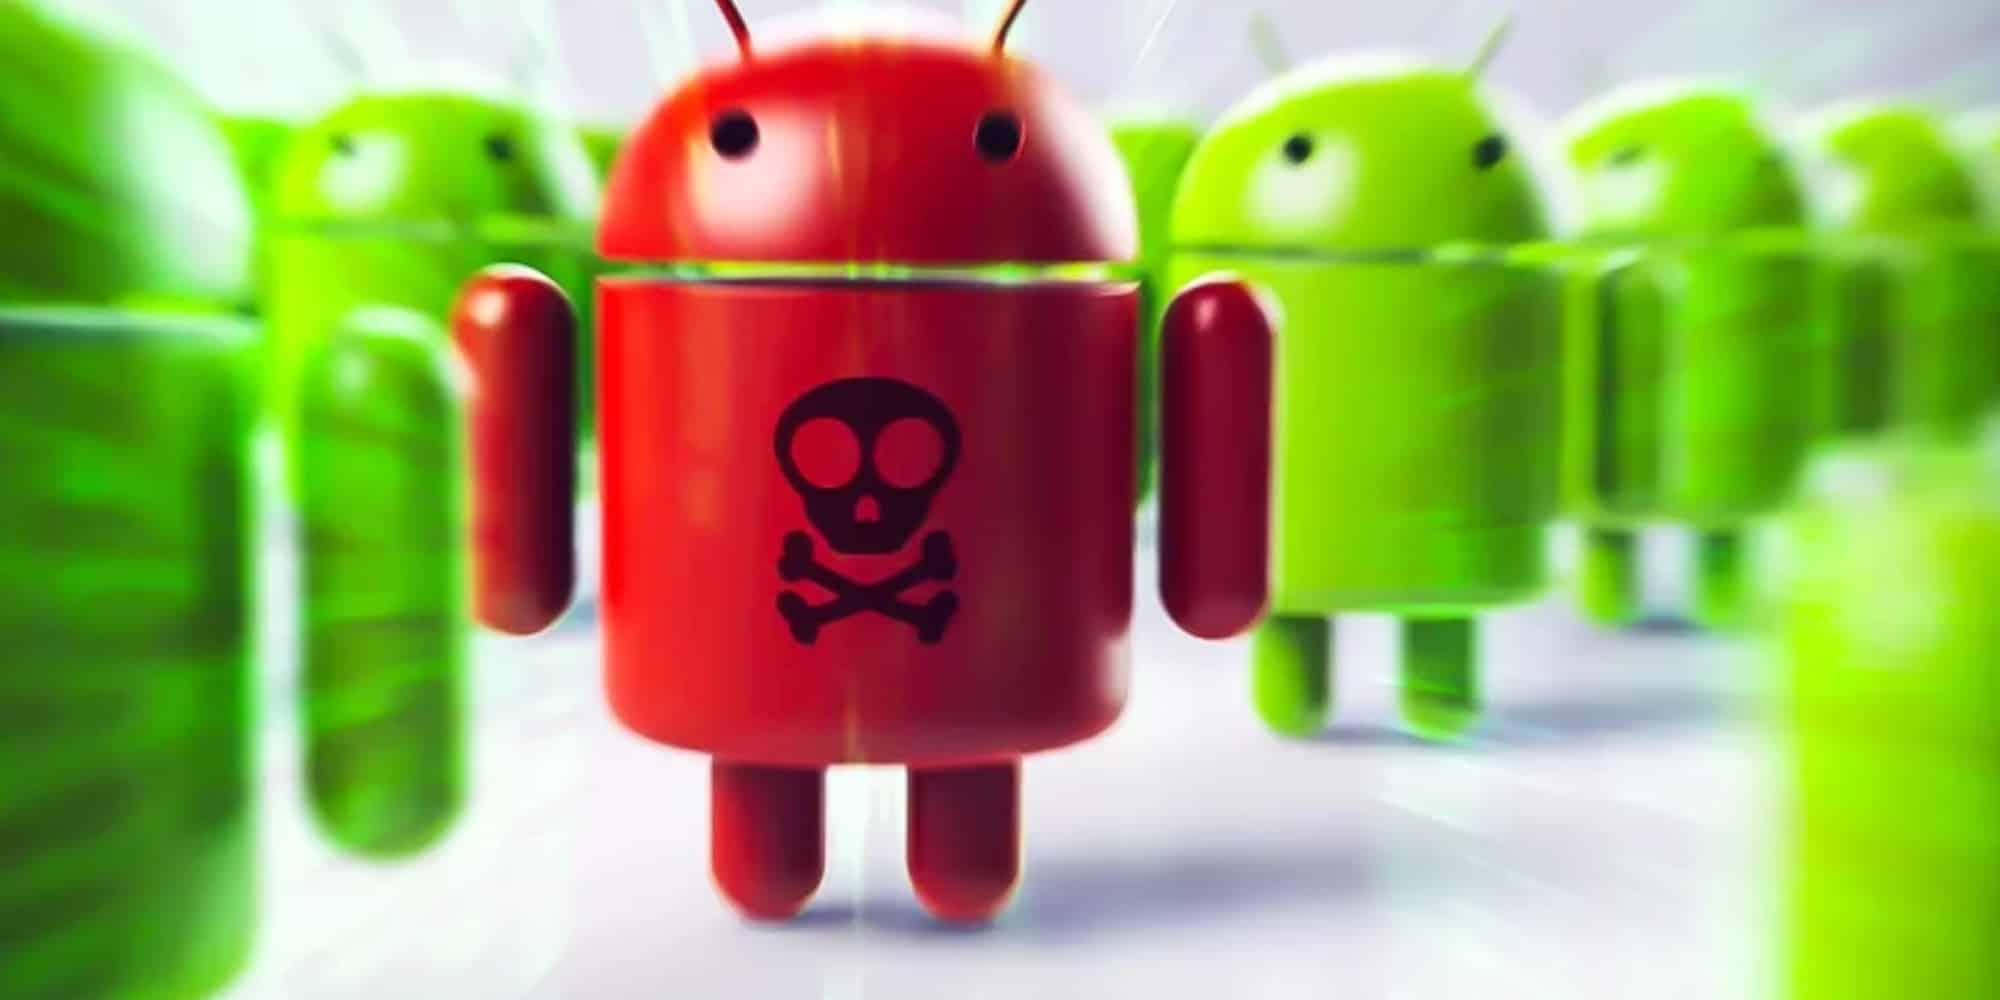 android ios - Επικίνδυνος ιός που απειλεί Android καμουφλάρεται ως πασίγνωστη εφαρμογή - Τι πρέπει να κάνετε